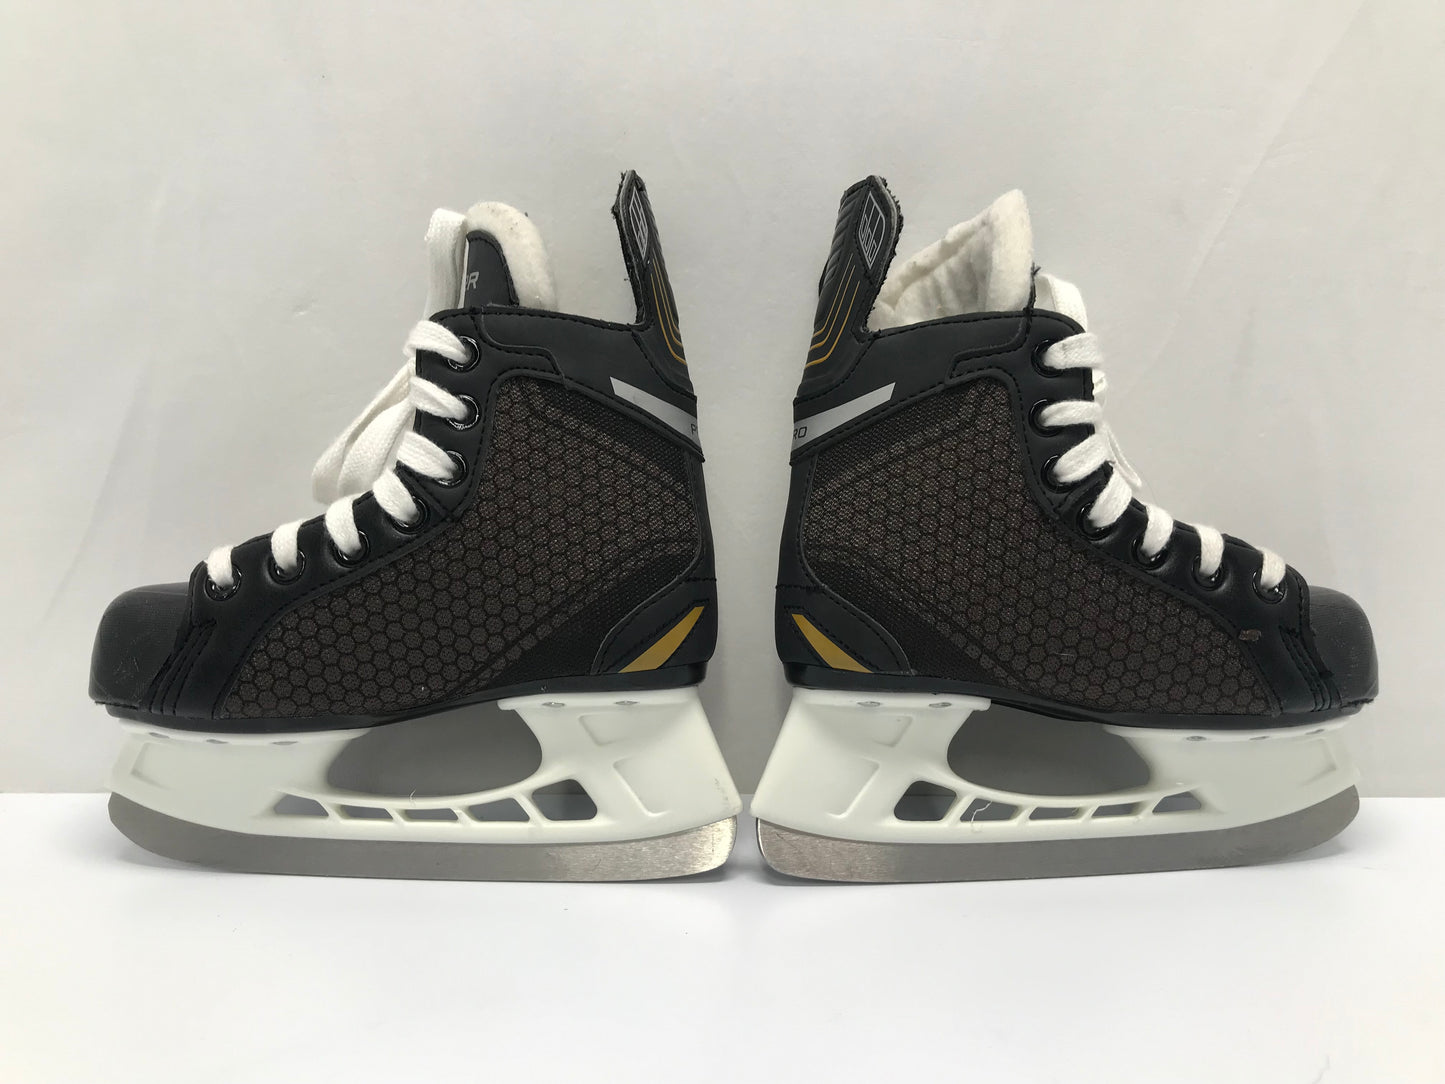 Hockey Skates Child Size 12 Shoe Size Bauer Supreme New Demo Model